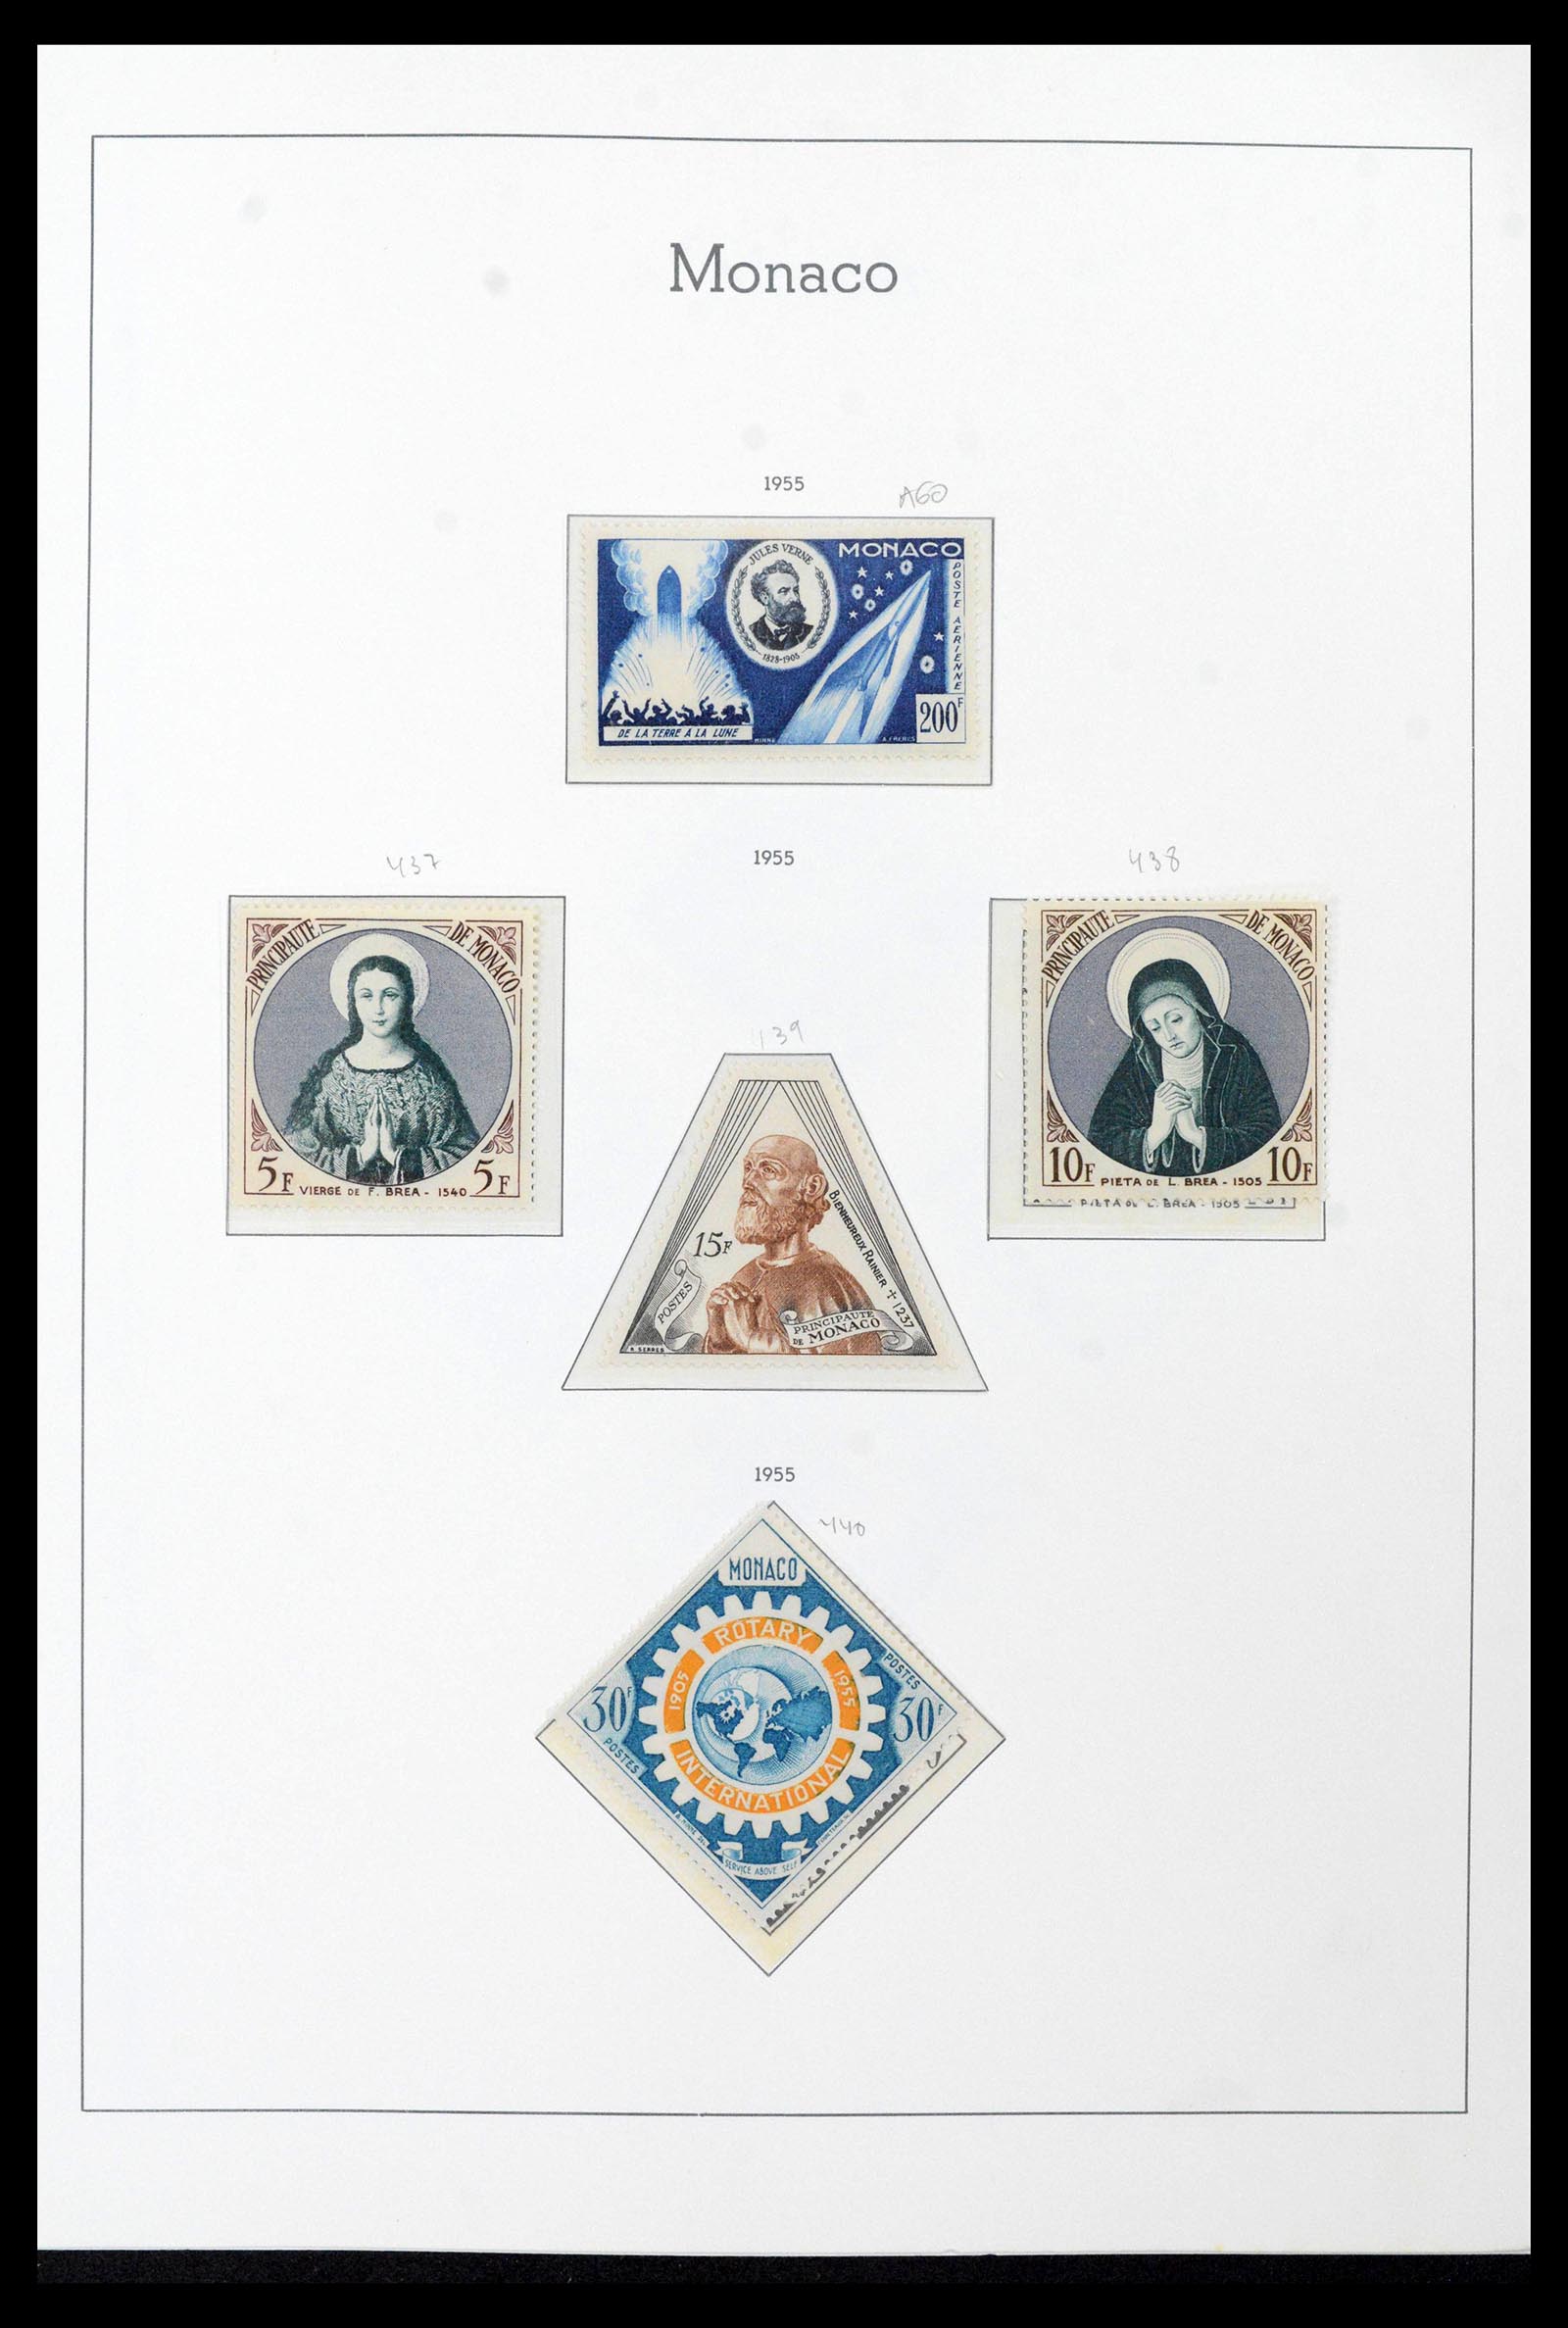 39250 0058 - Stamp collection 39250 Monaco 1885-1995.